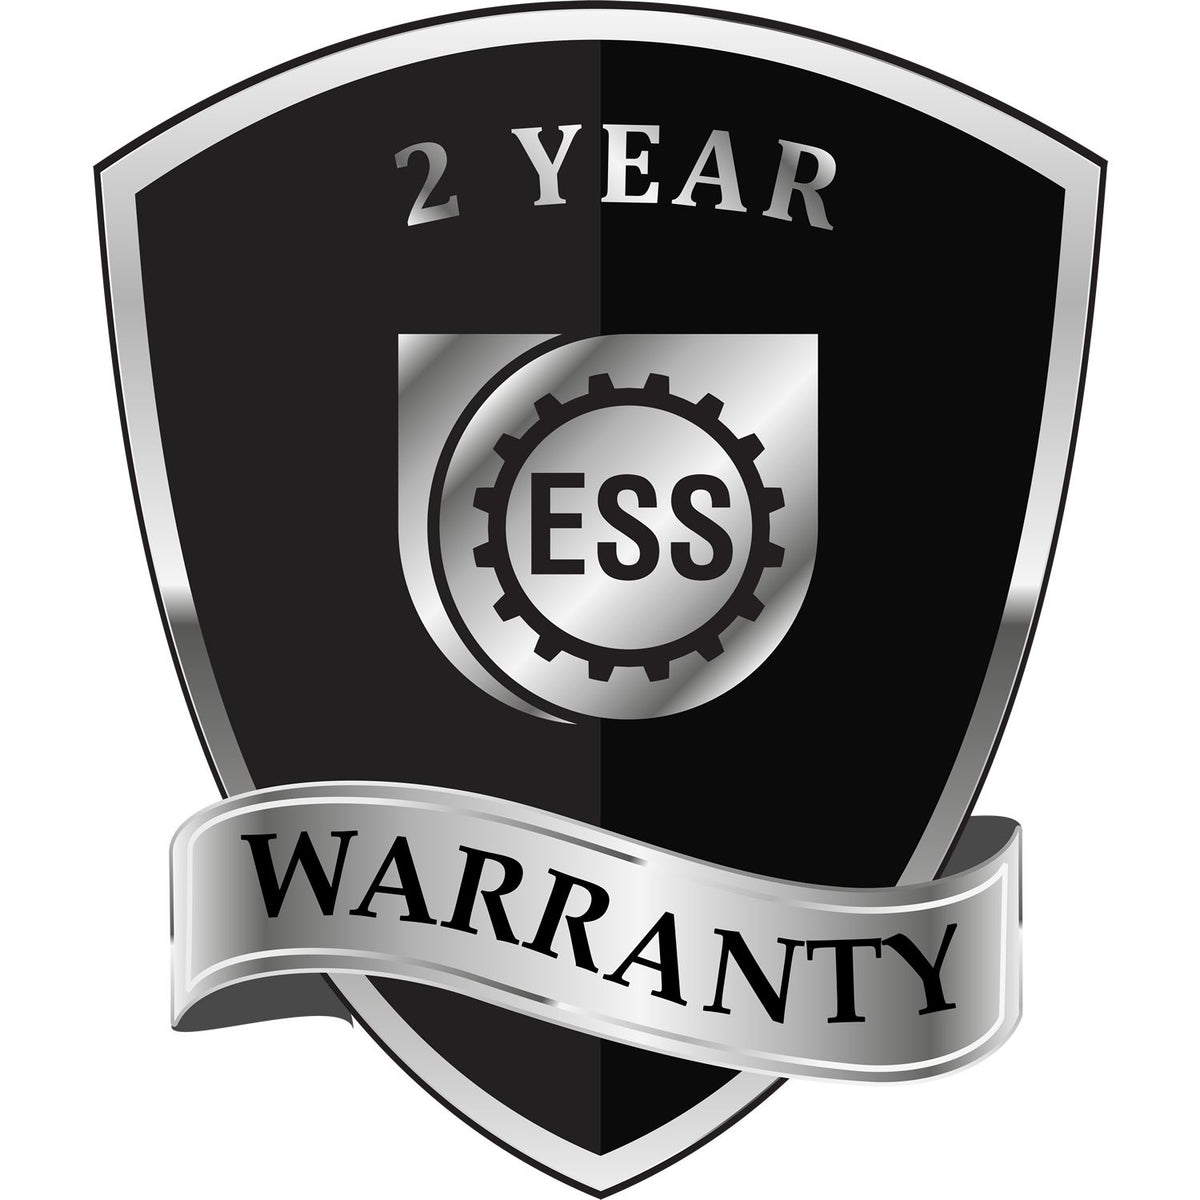 A black and silver badge or emblem showing warranty information for the Gift Utah Land Surveyor Seal